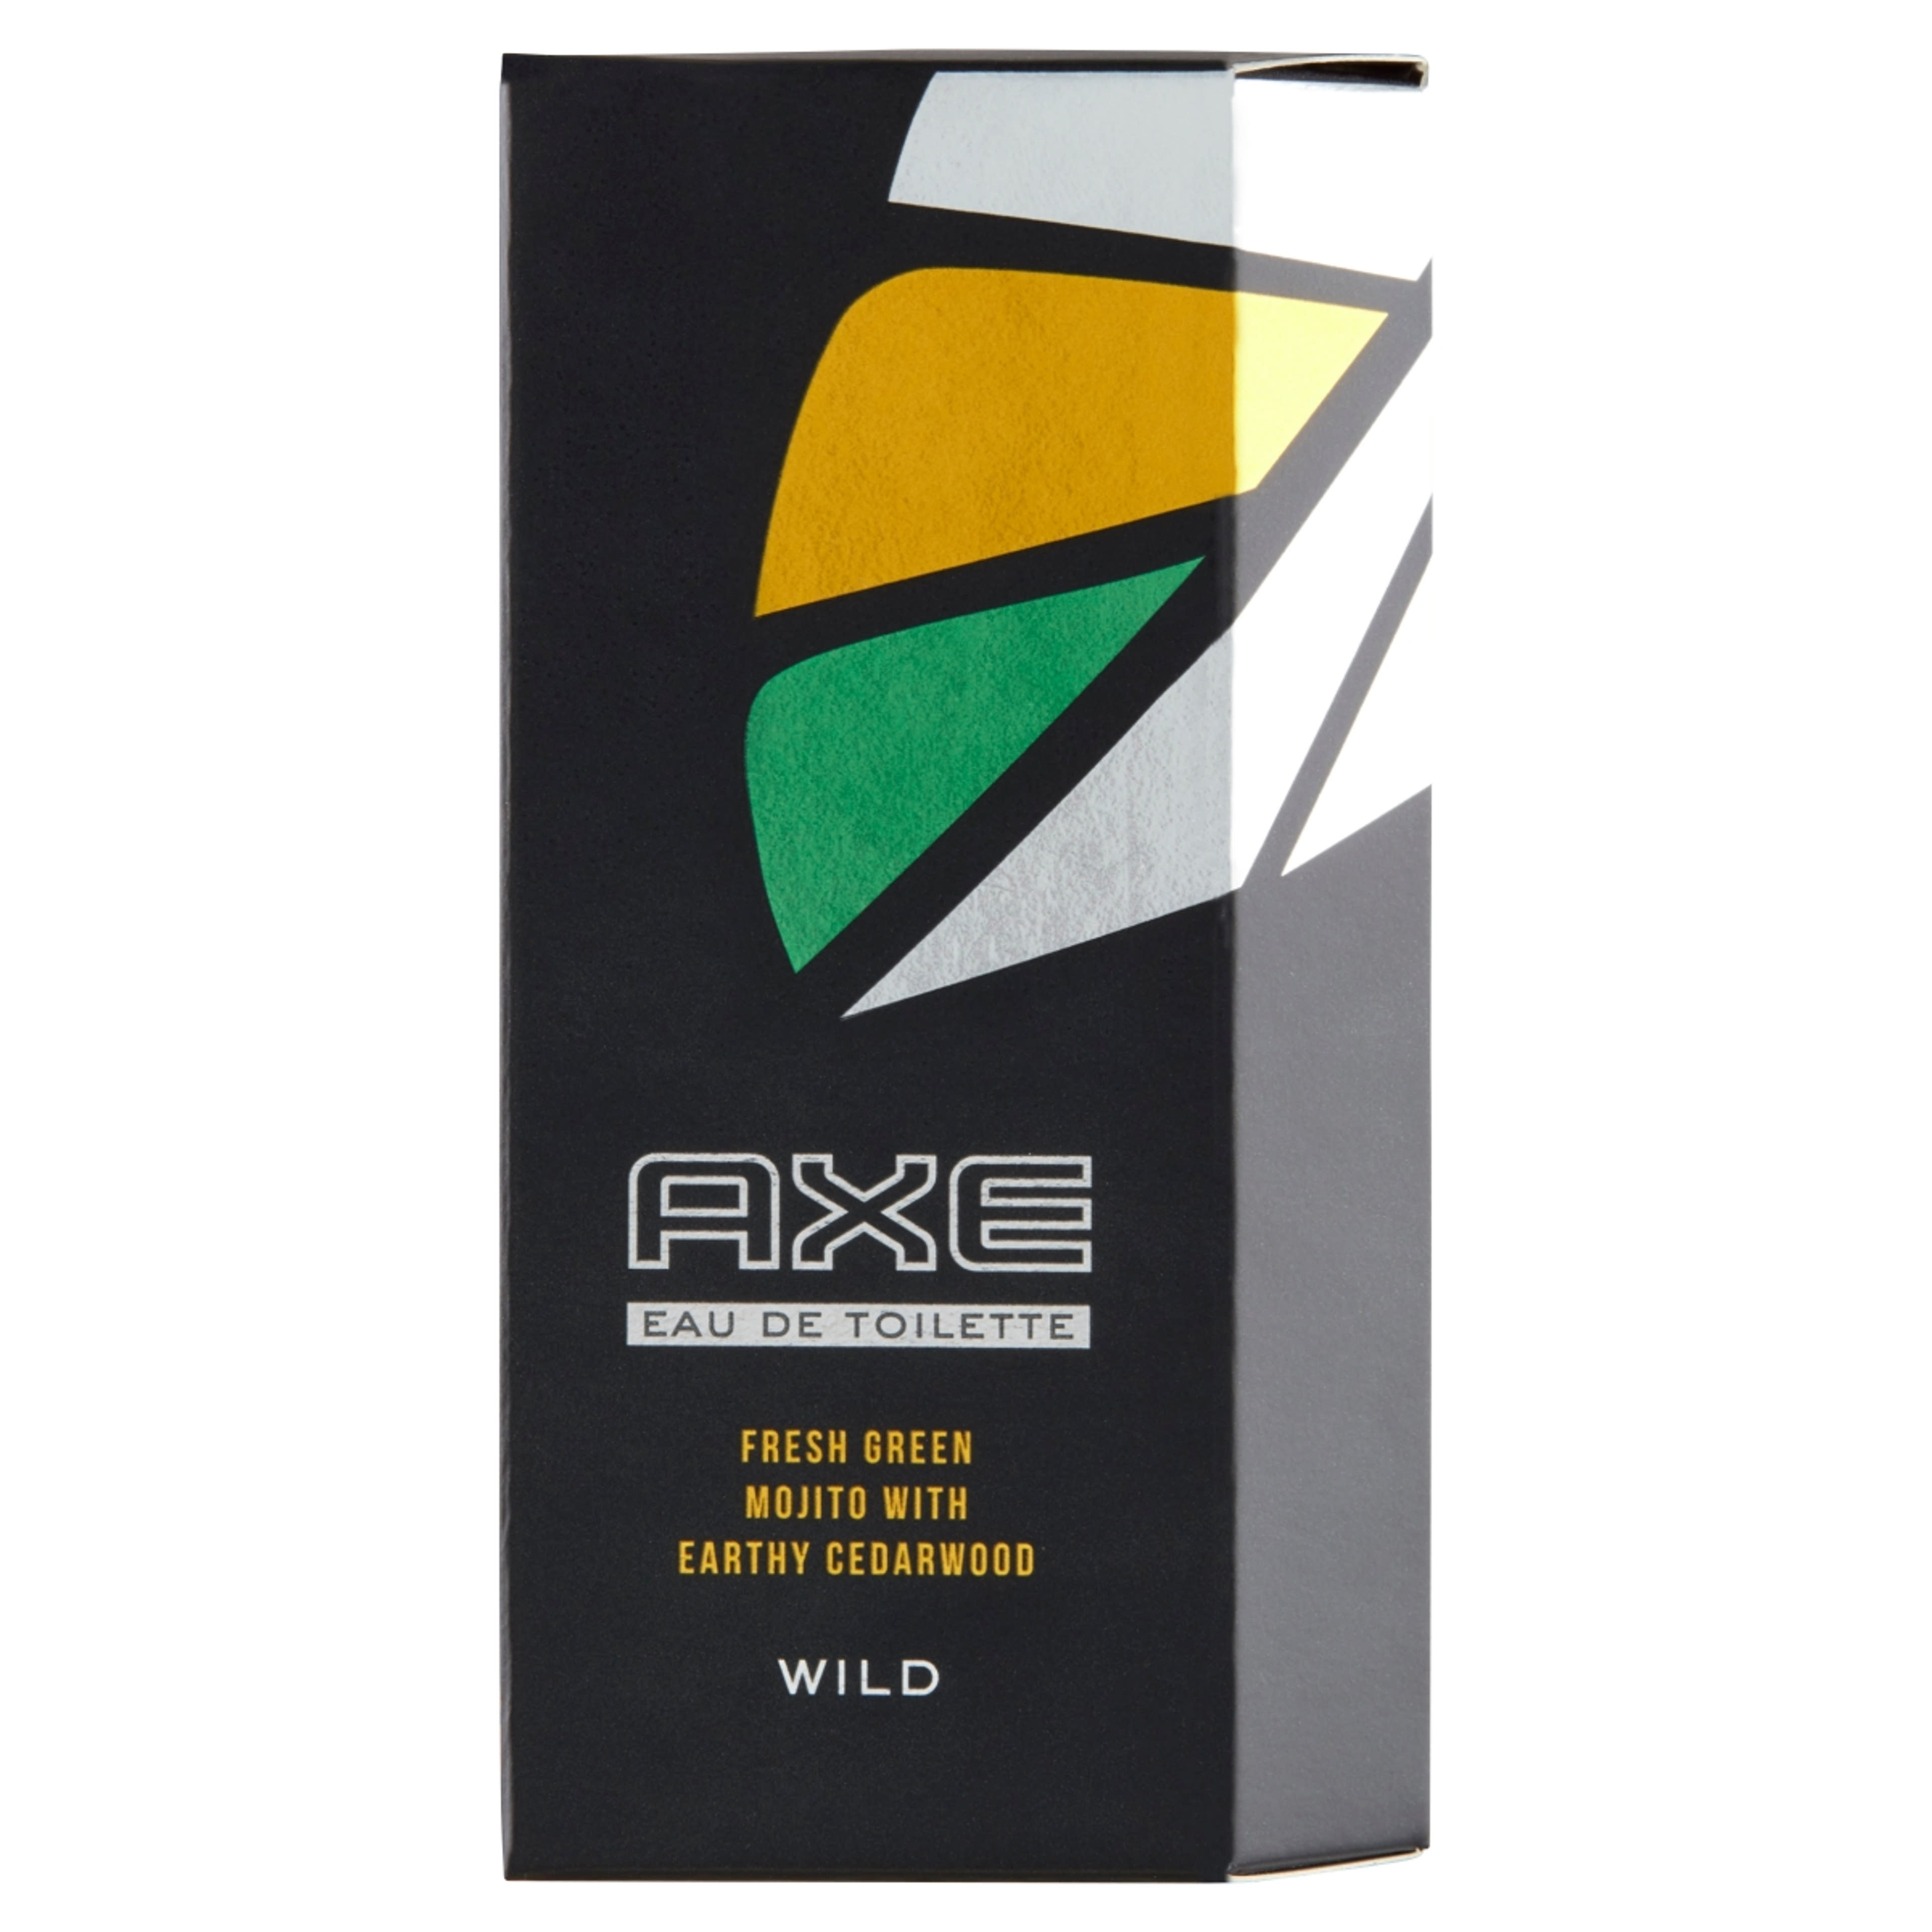 Axe wild férfi eau de toilette - 50 ml-1